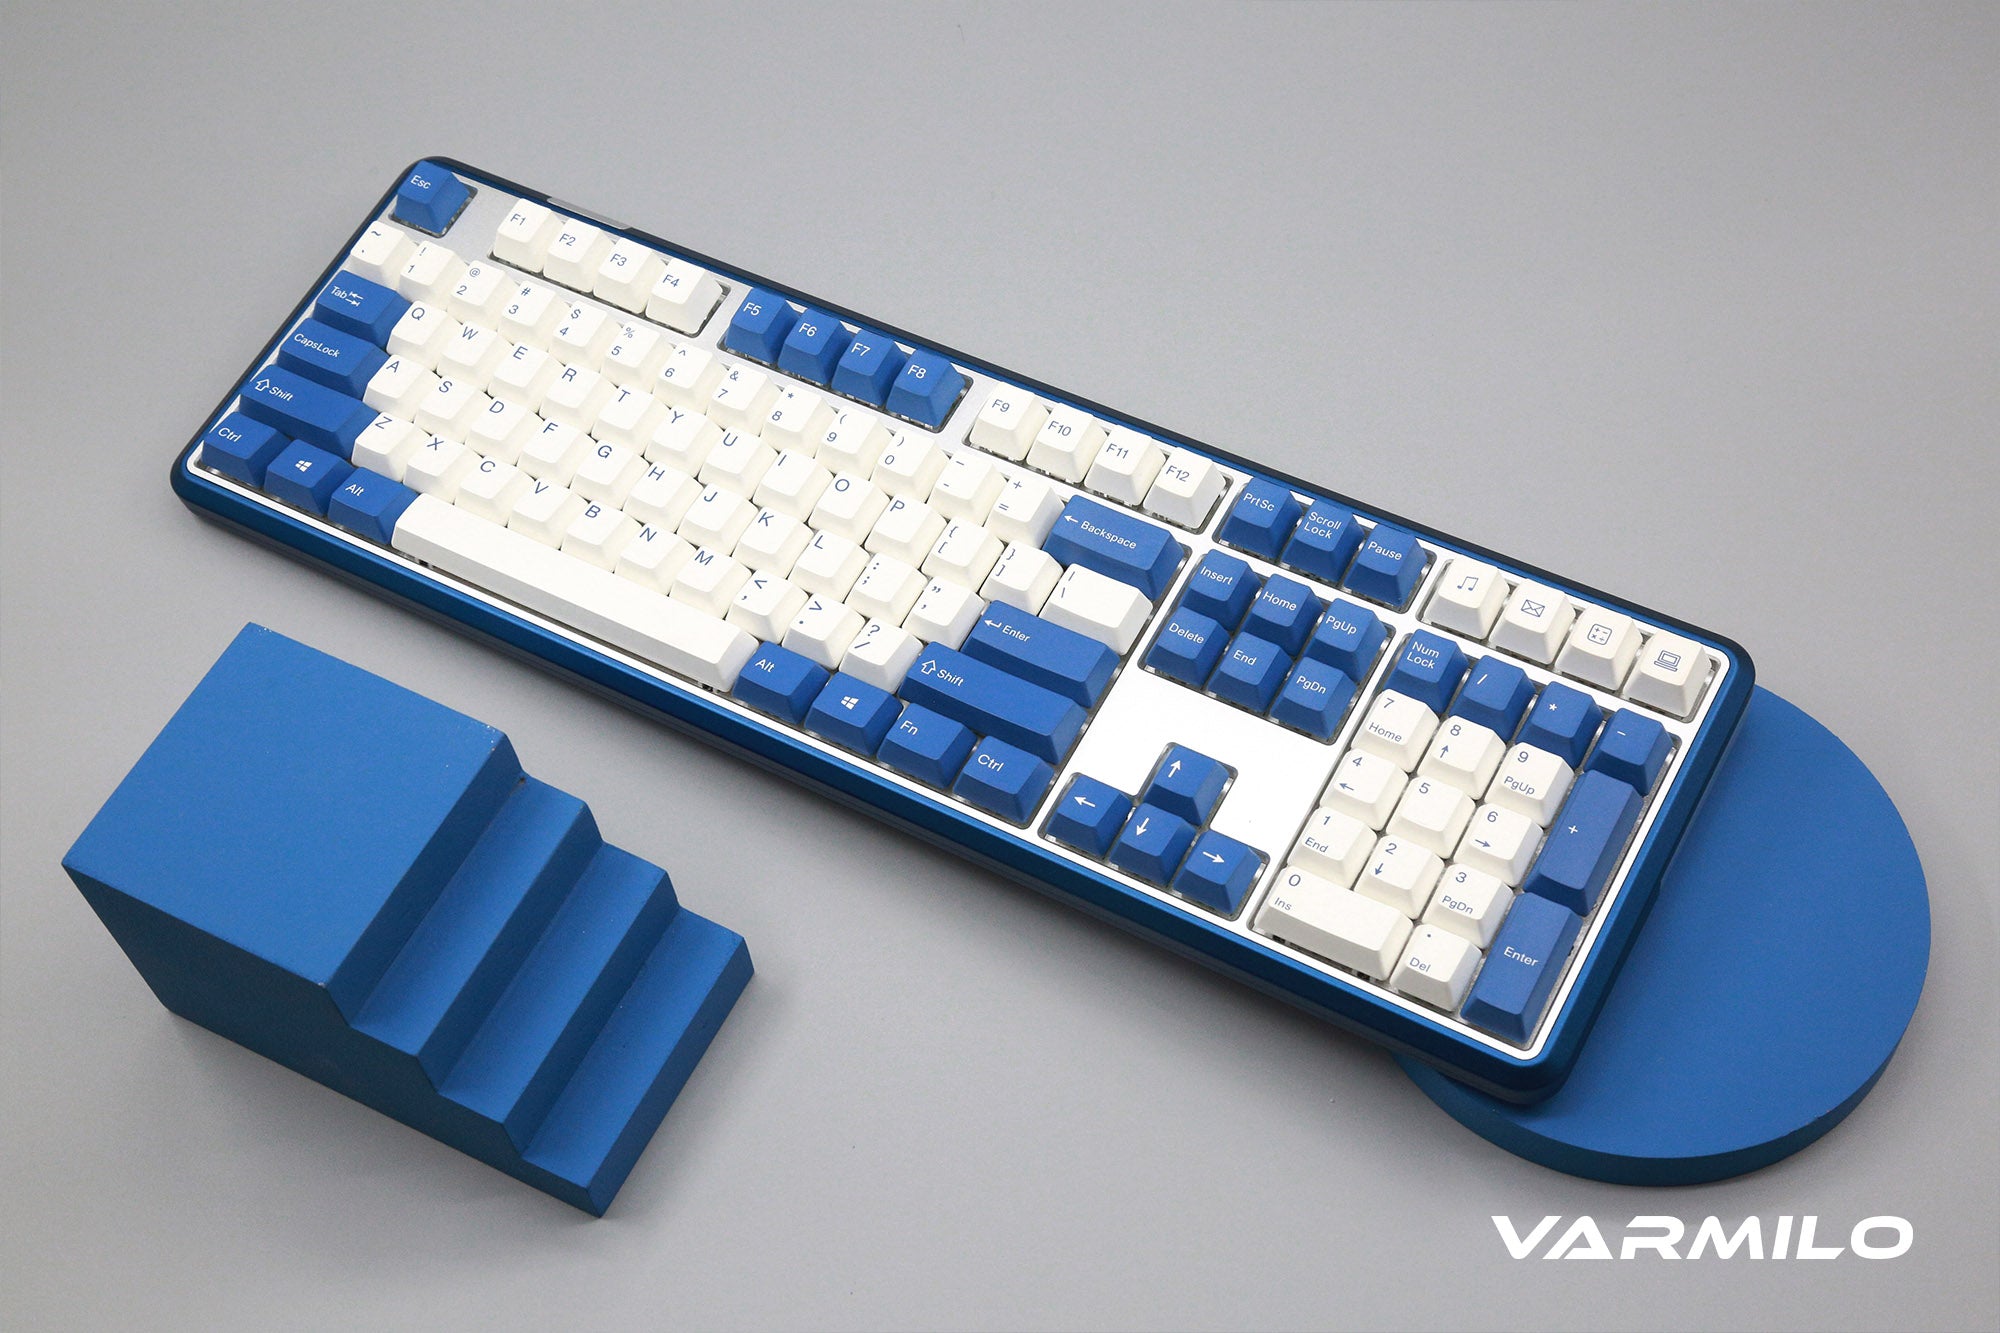 Varmilo Sword 2-108 Pacific Blue Mechanical Keyboard